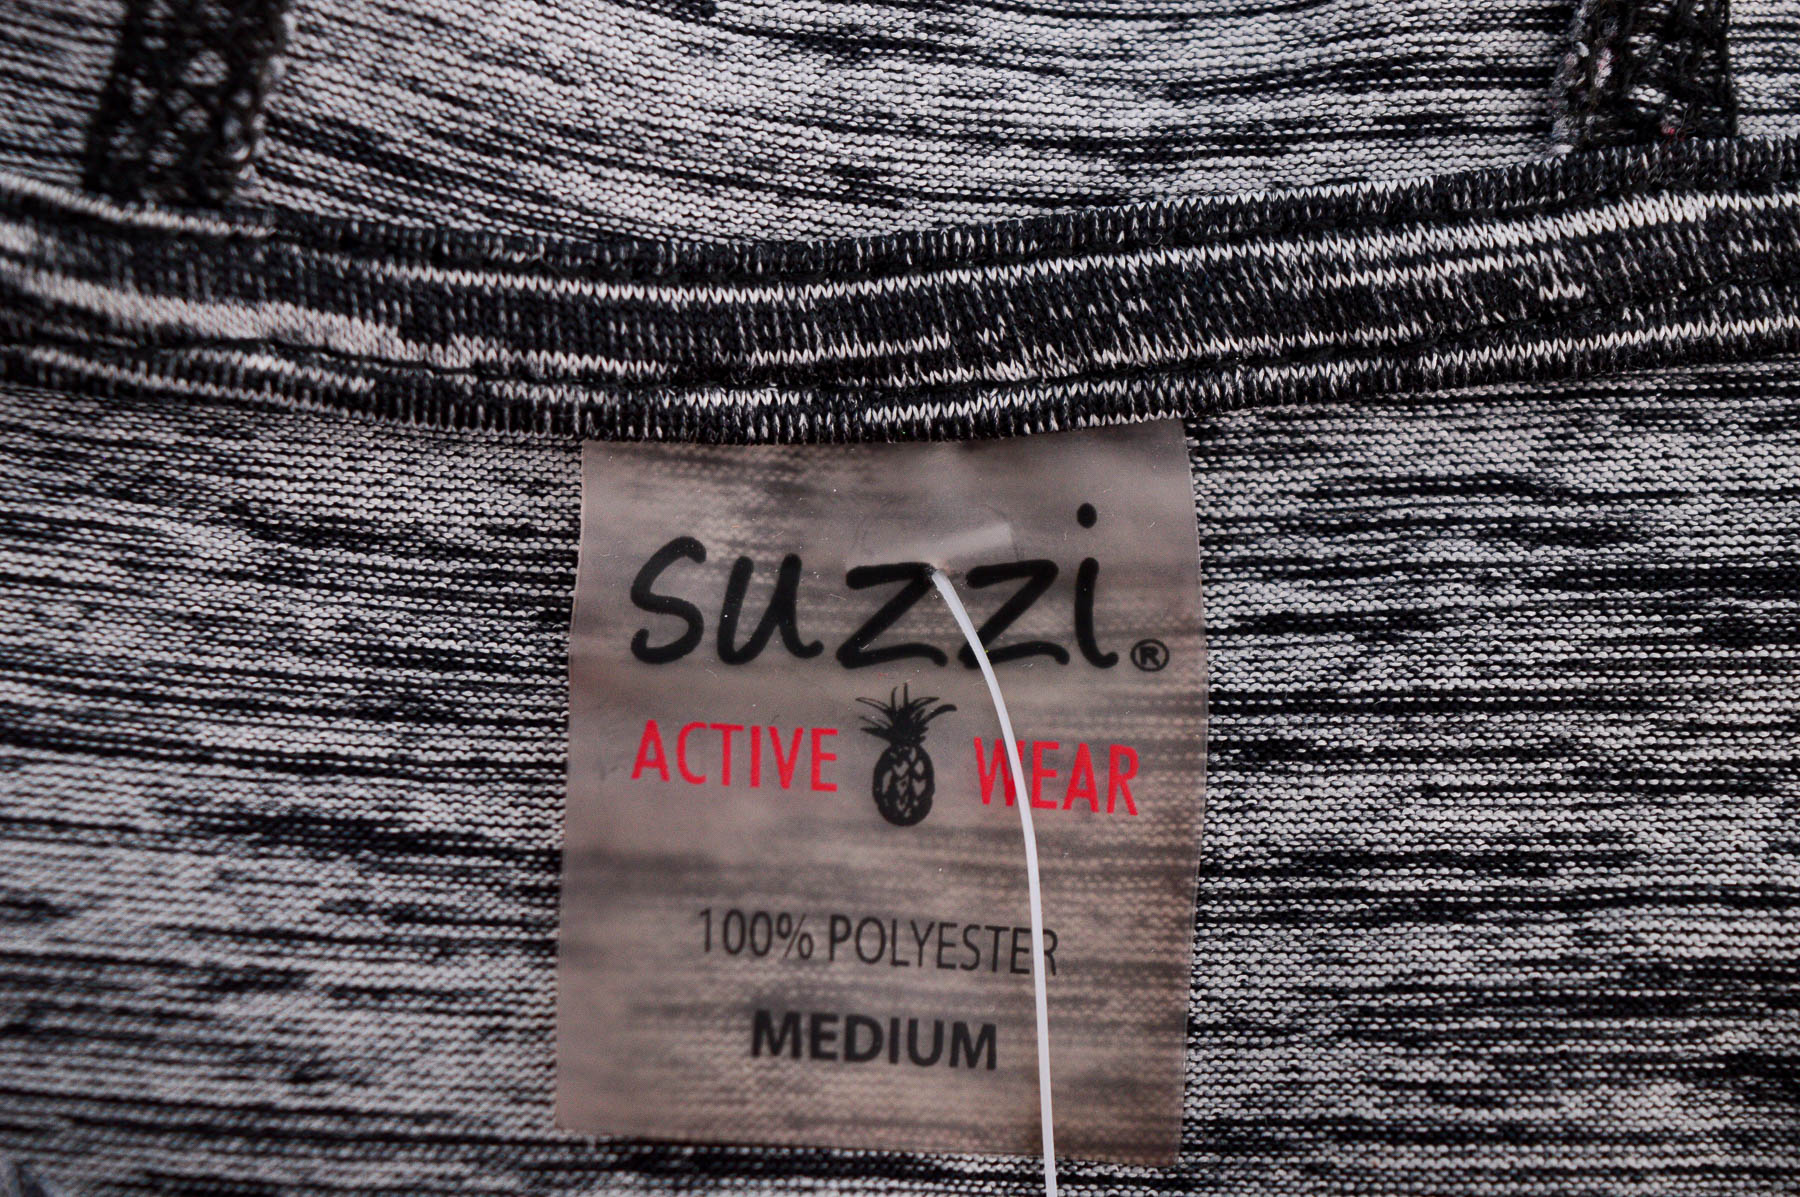 Damska bluza sportowa - Suzzi Activewear - 2